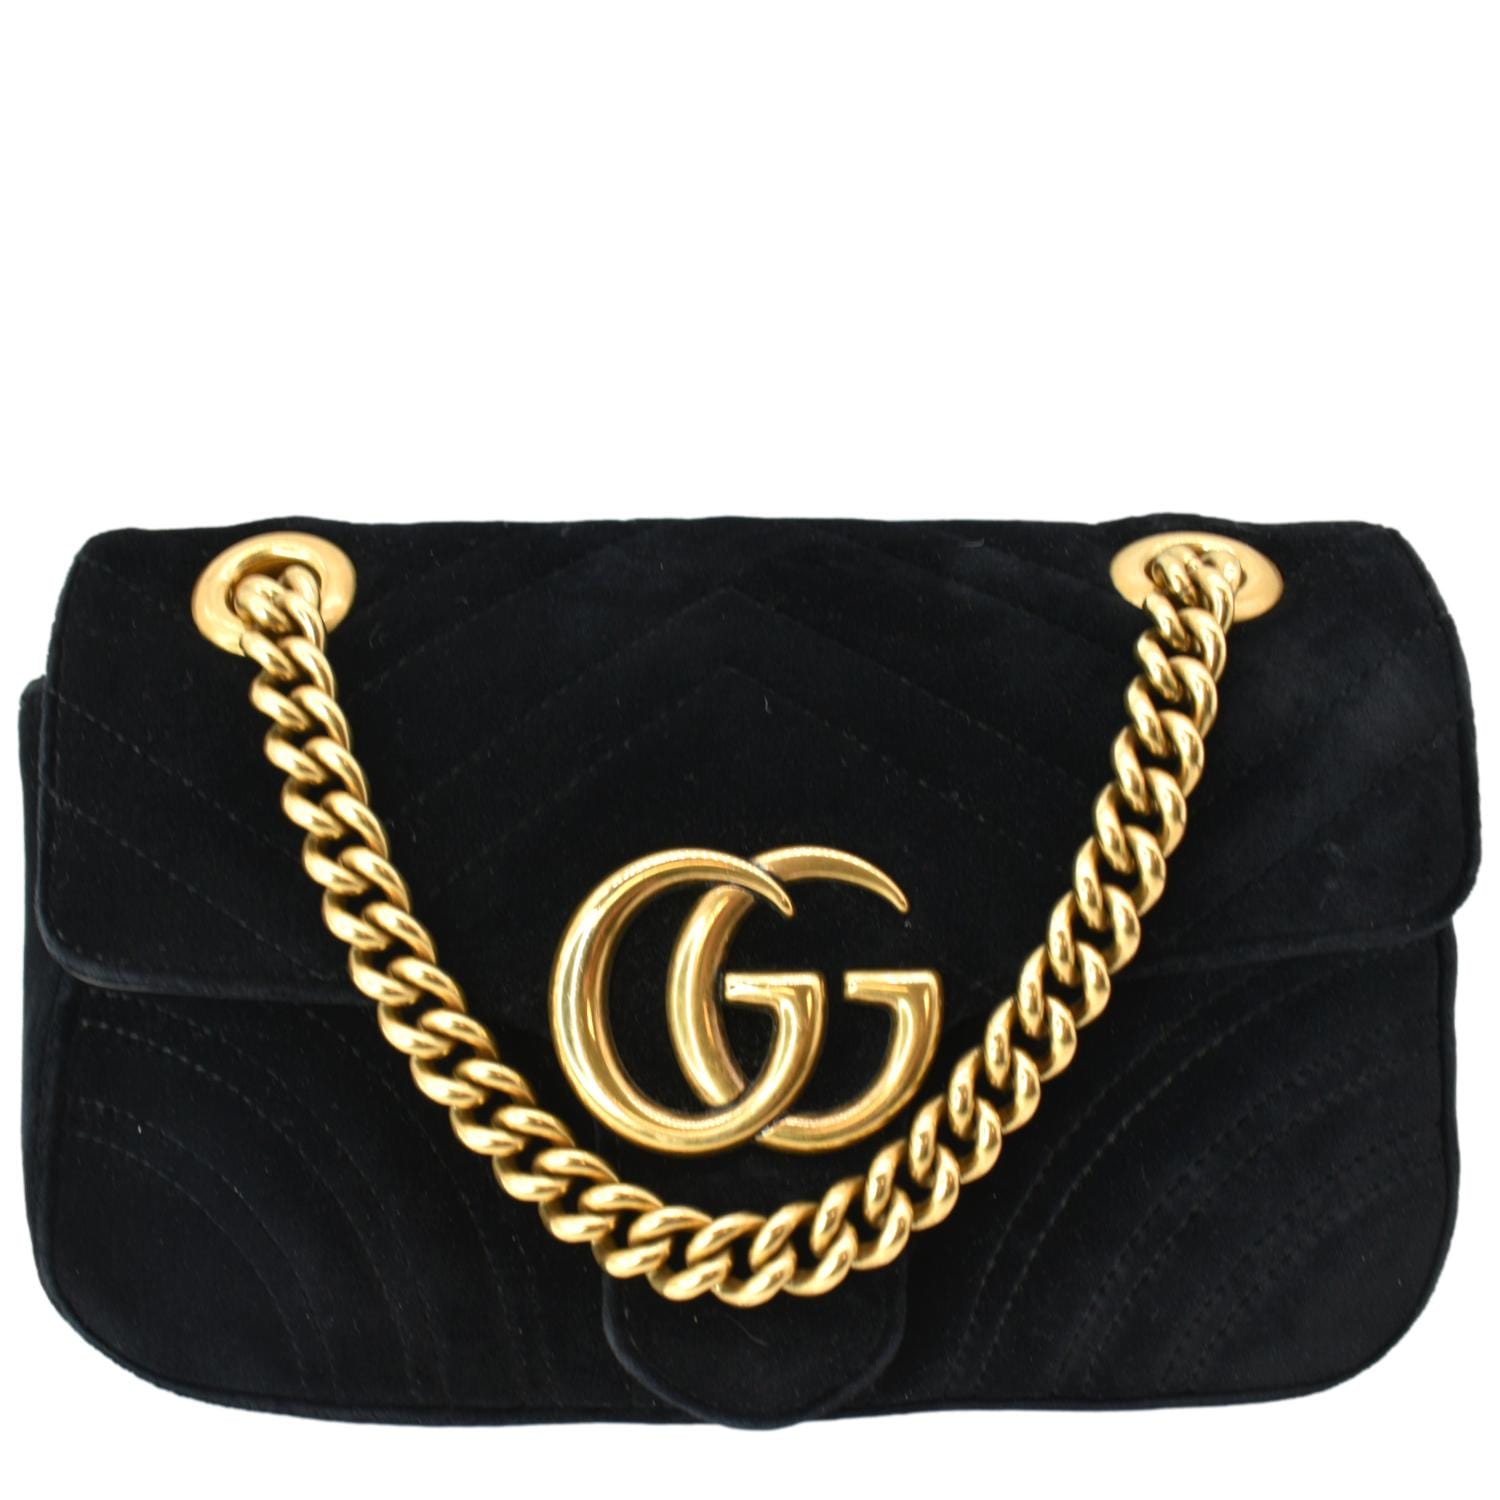 Gucci Red GG Marmont Mini Velvet Bag - Farfetch